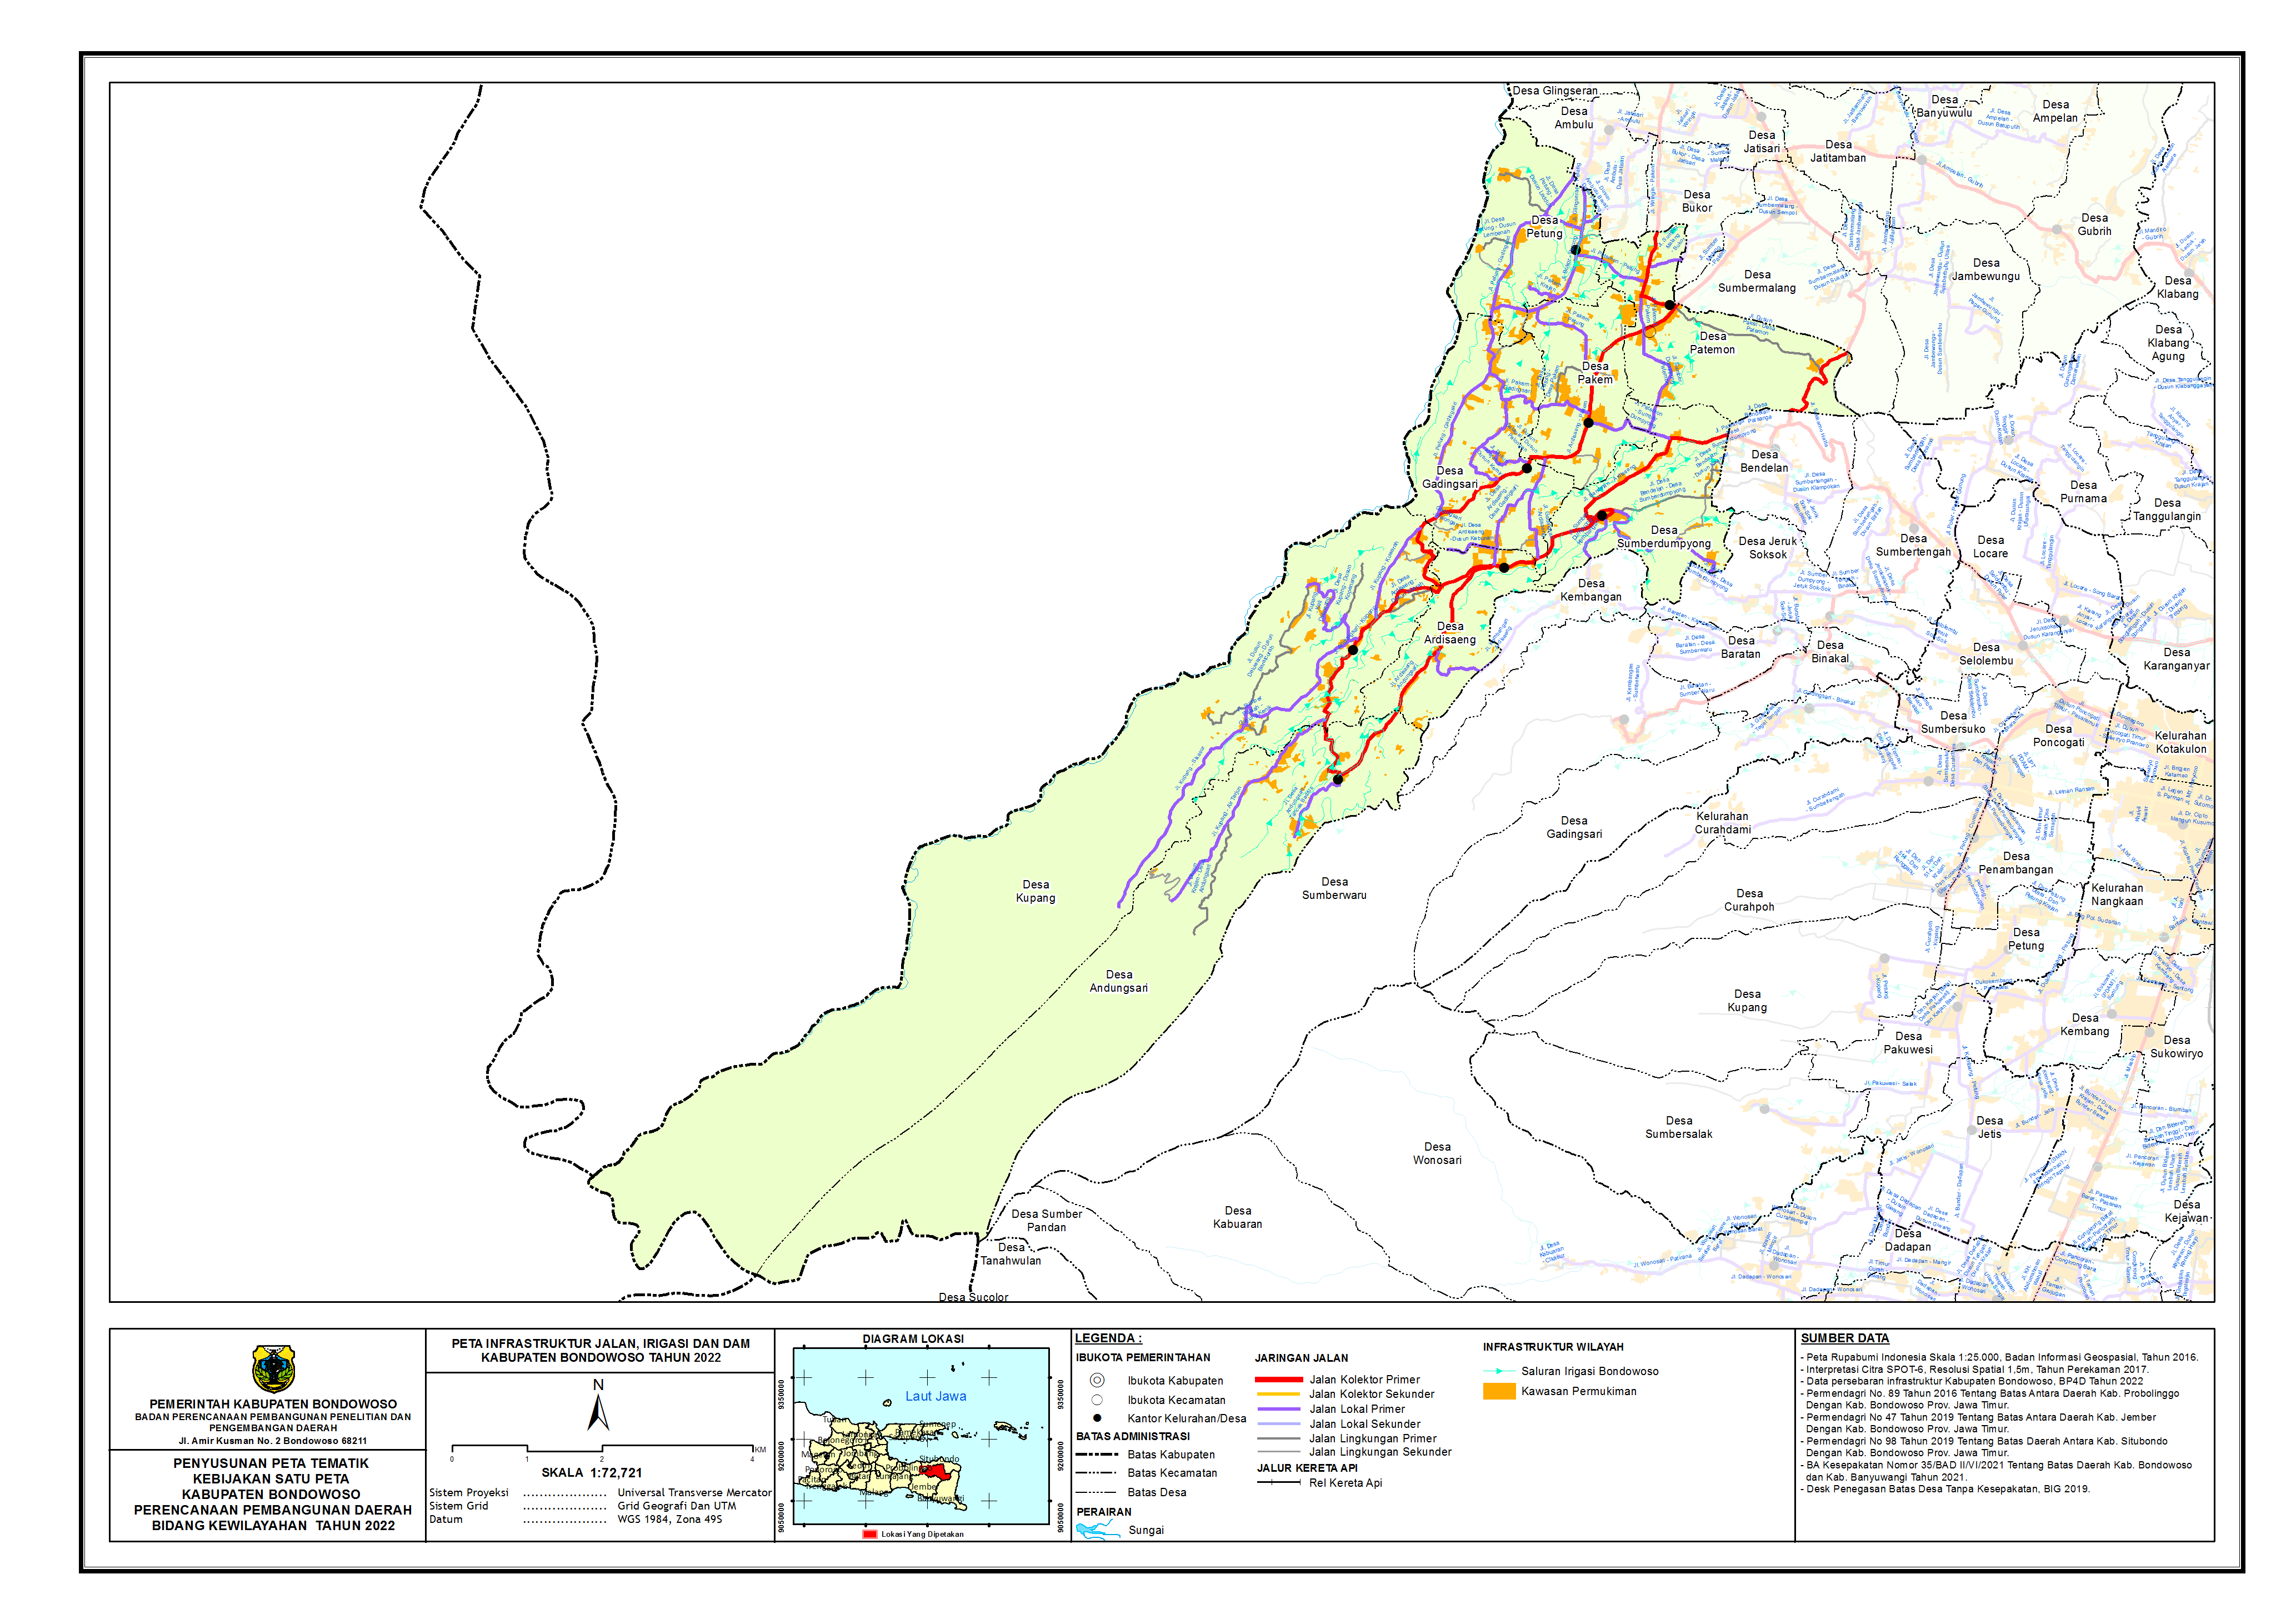 Peta Infrastruktur Wilayah Kecamatan Pakem.png